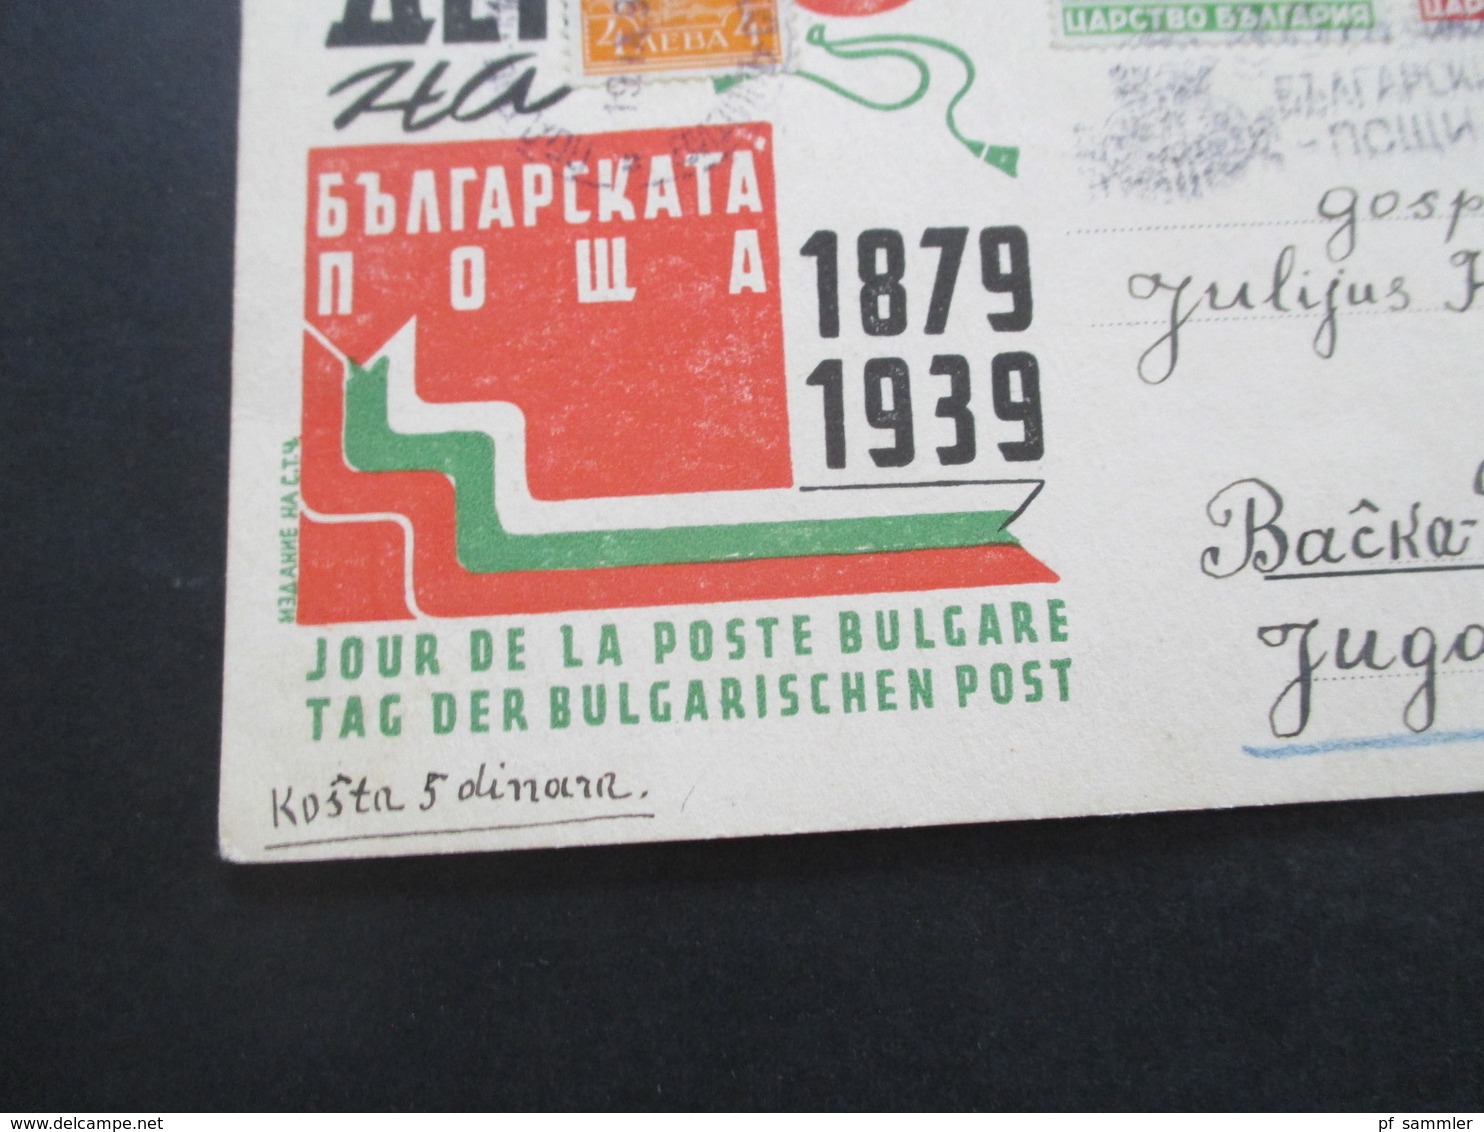 Bulgarien 1939 Sonderpsotkarte Tag Der Bulgarischen Post 1879 - 1939 Nach Backa Palanka Jugoslawien Gesendet - Storia Postale